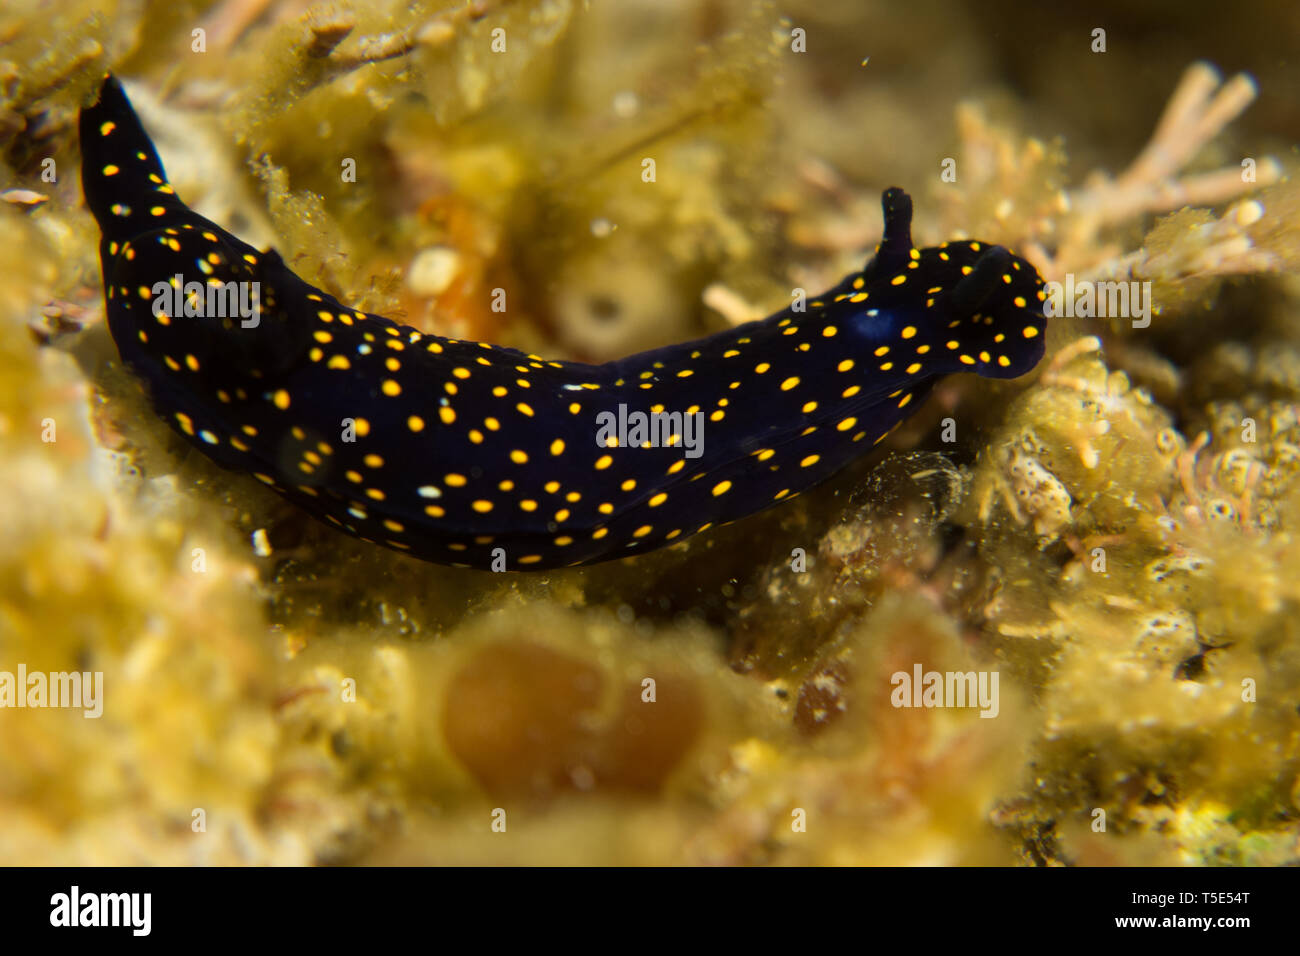 A beautiful nudibranch, or sea slug, Felimare californiensis, the California Blue Dorid seen while scuba diving in the Sea of Cortez, Baja, Mexico Stock Photo